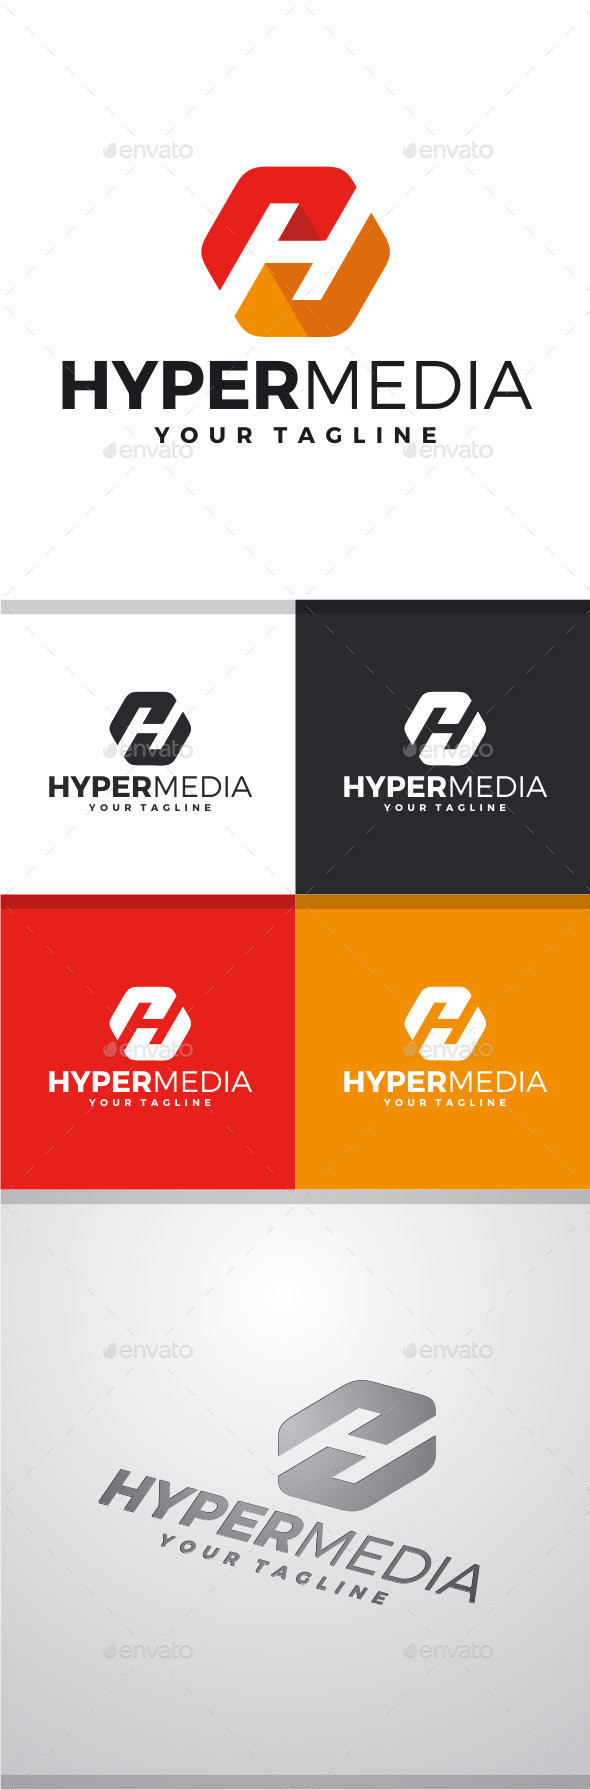 Hypermediapreview